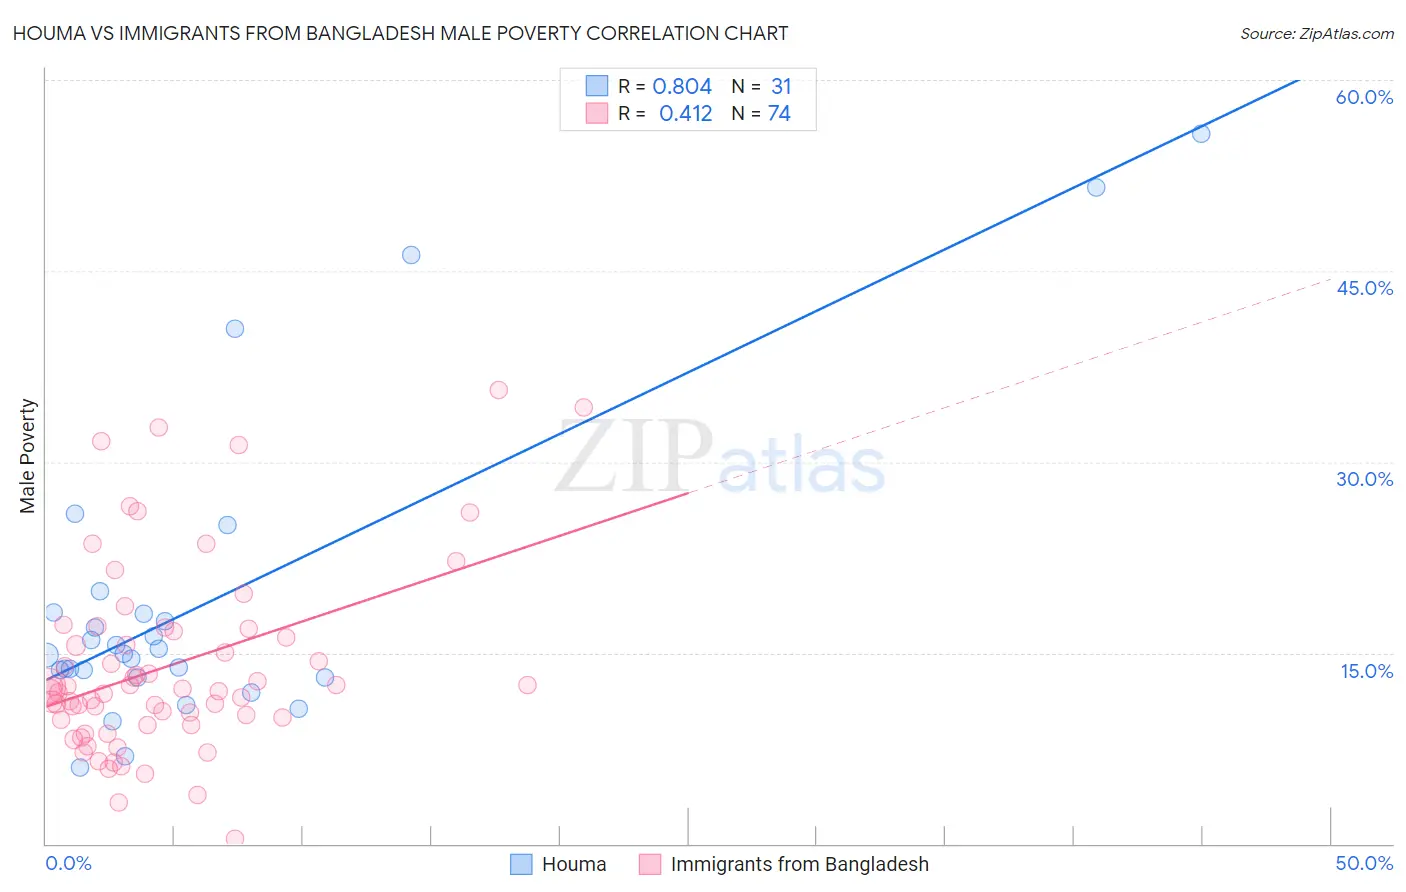 Houma vs Immigrants from Bangladesh Male Poverty